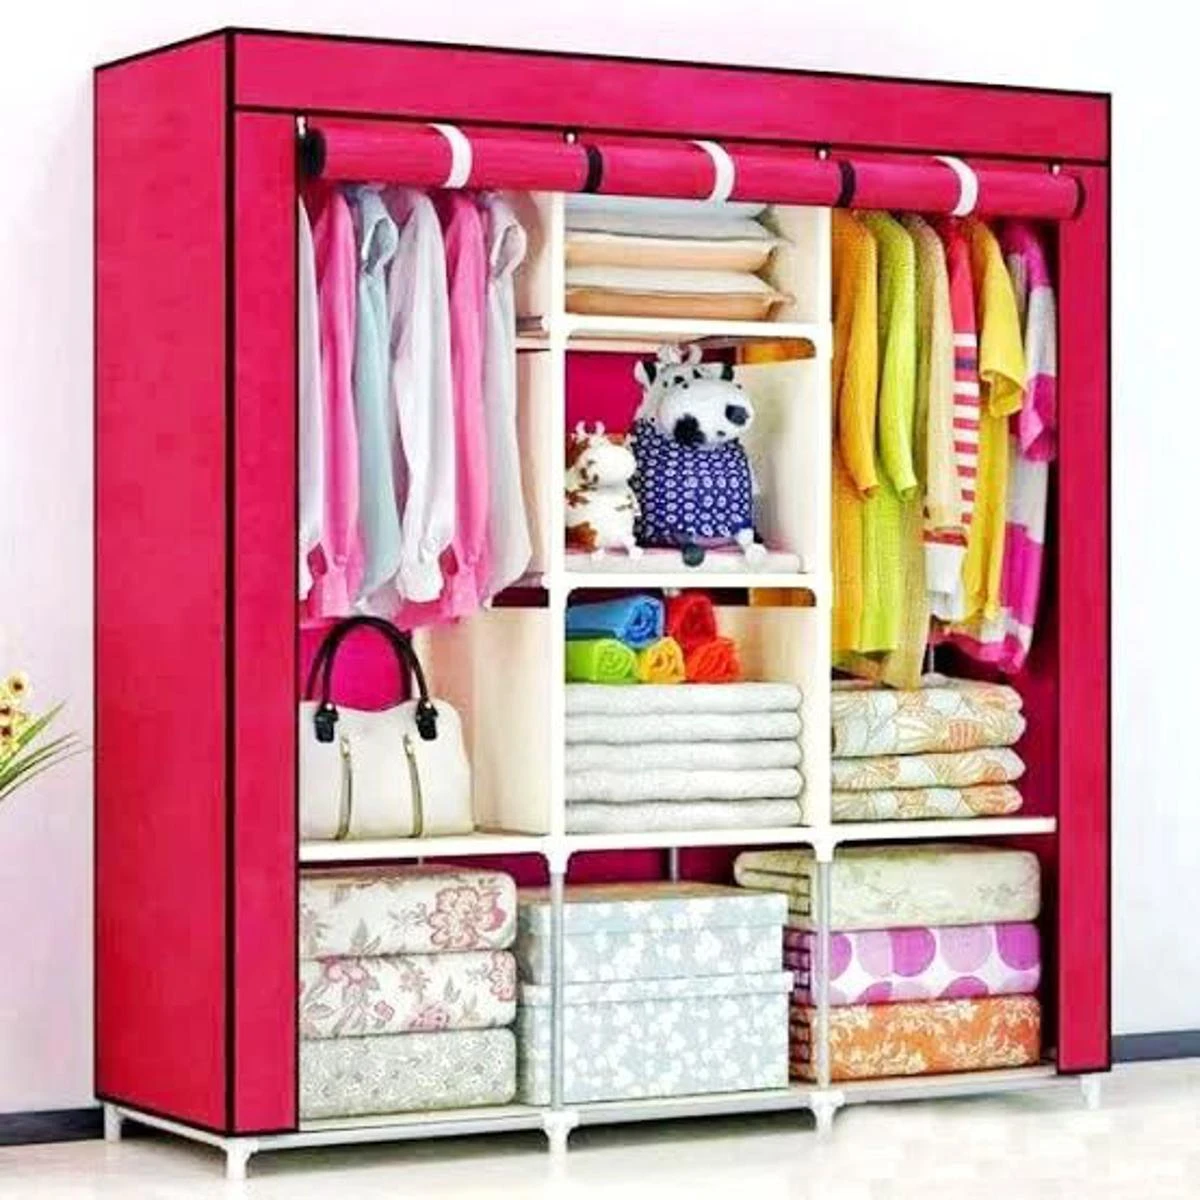 Wardrobe Storage Organizer for Clothes - Big Size 3 part